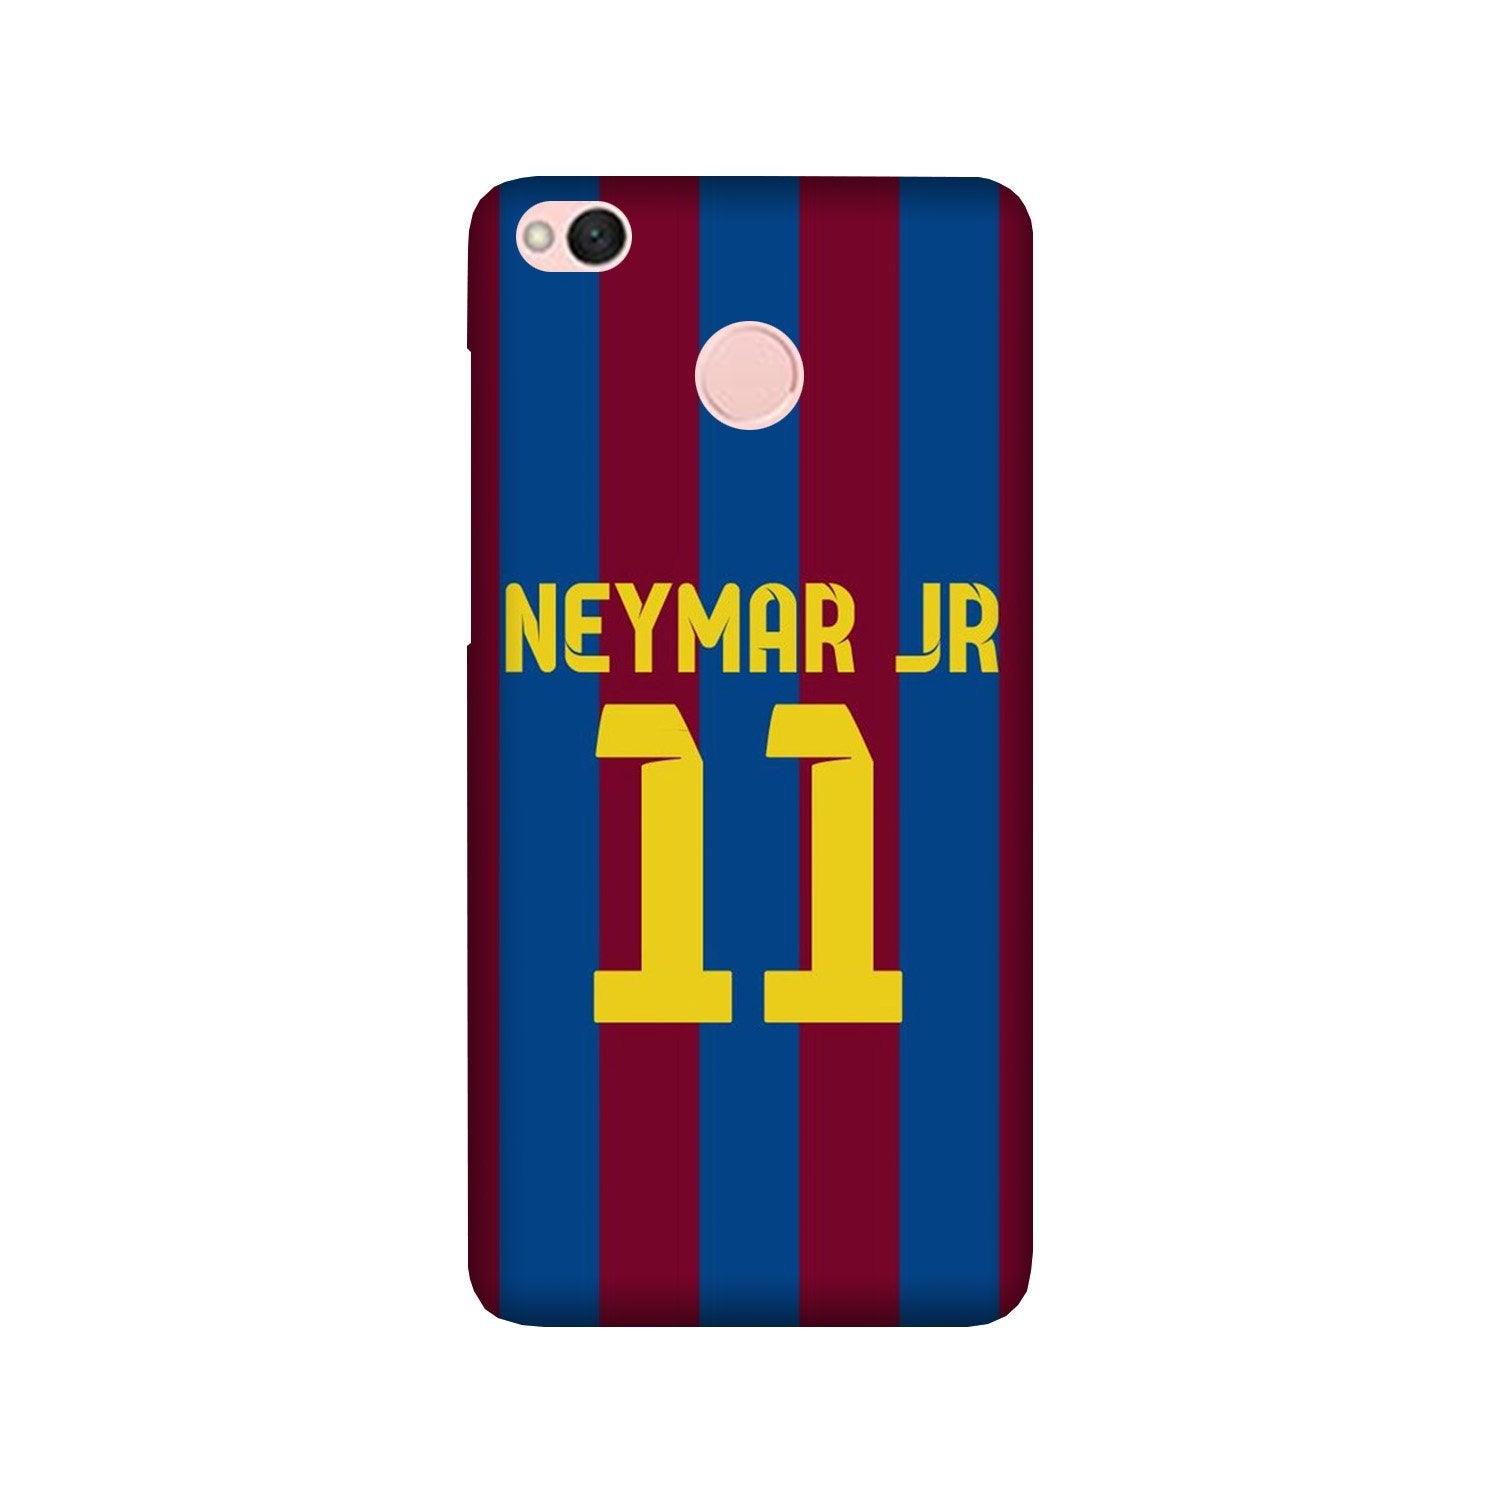 Neymar Jr Case for Redmi 4  (Design - 162)